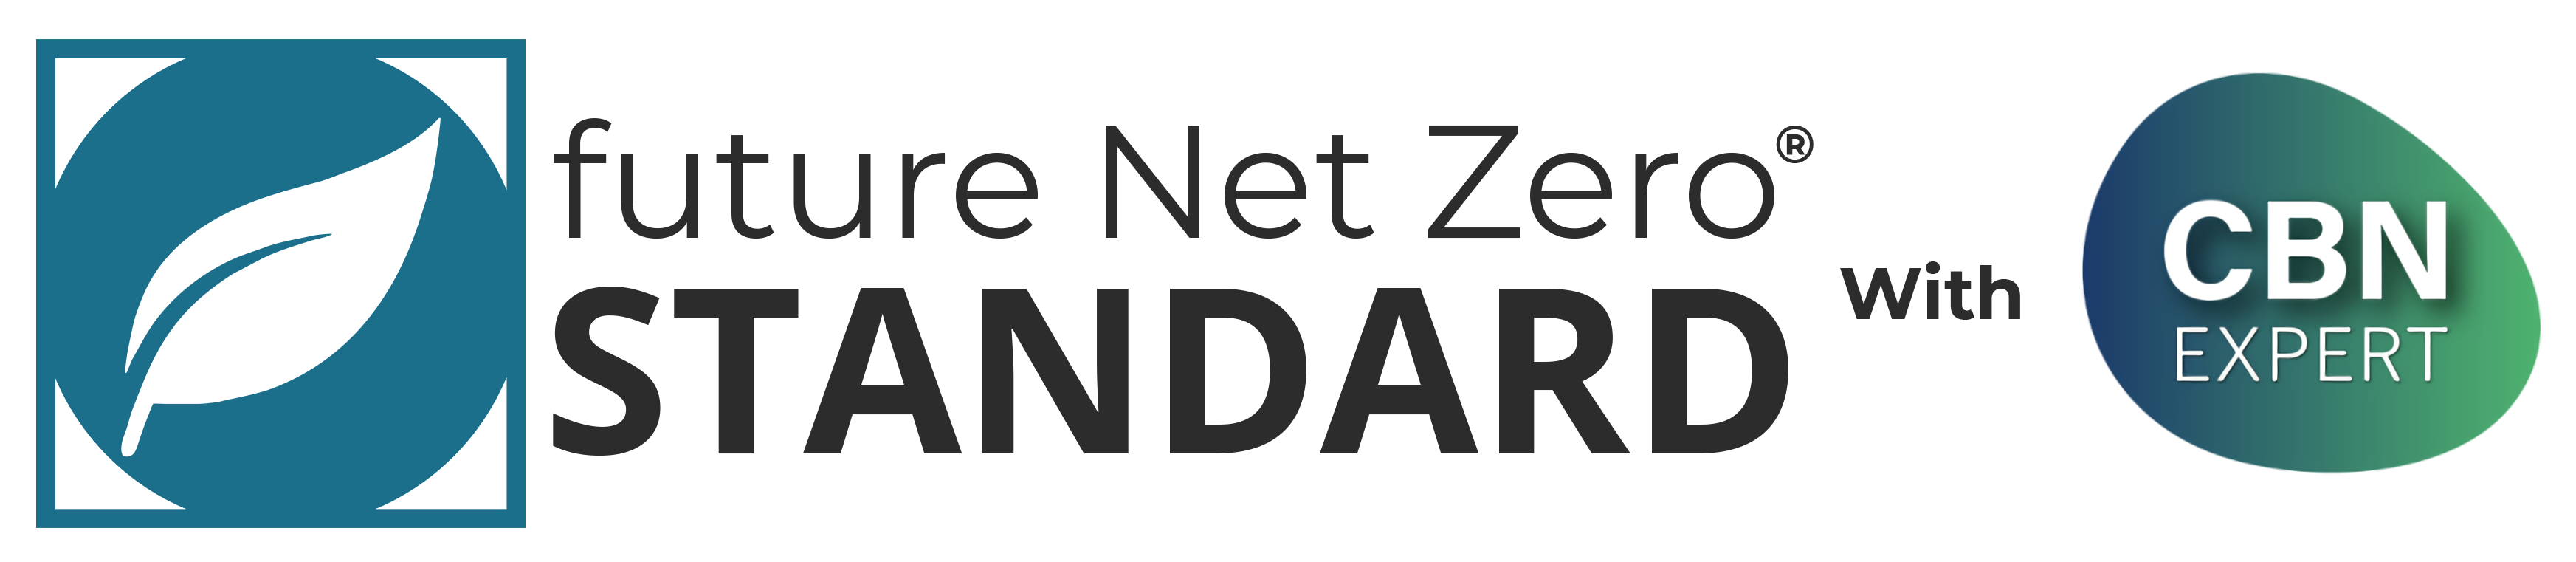 The FNZ Standard with CBN Expert